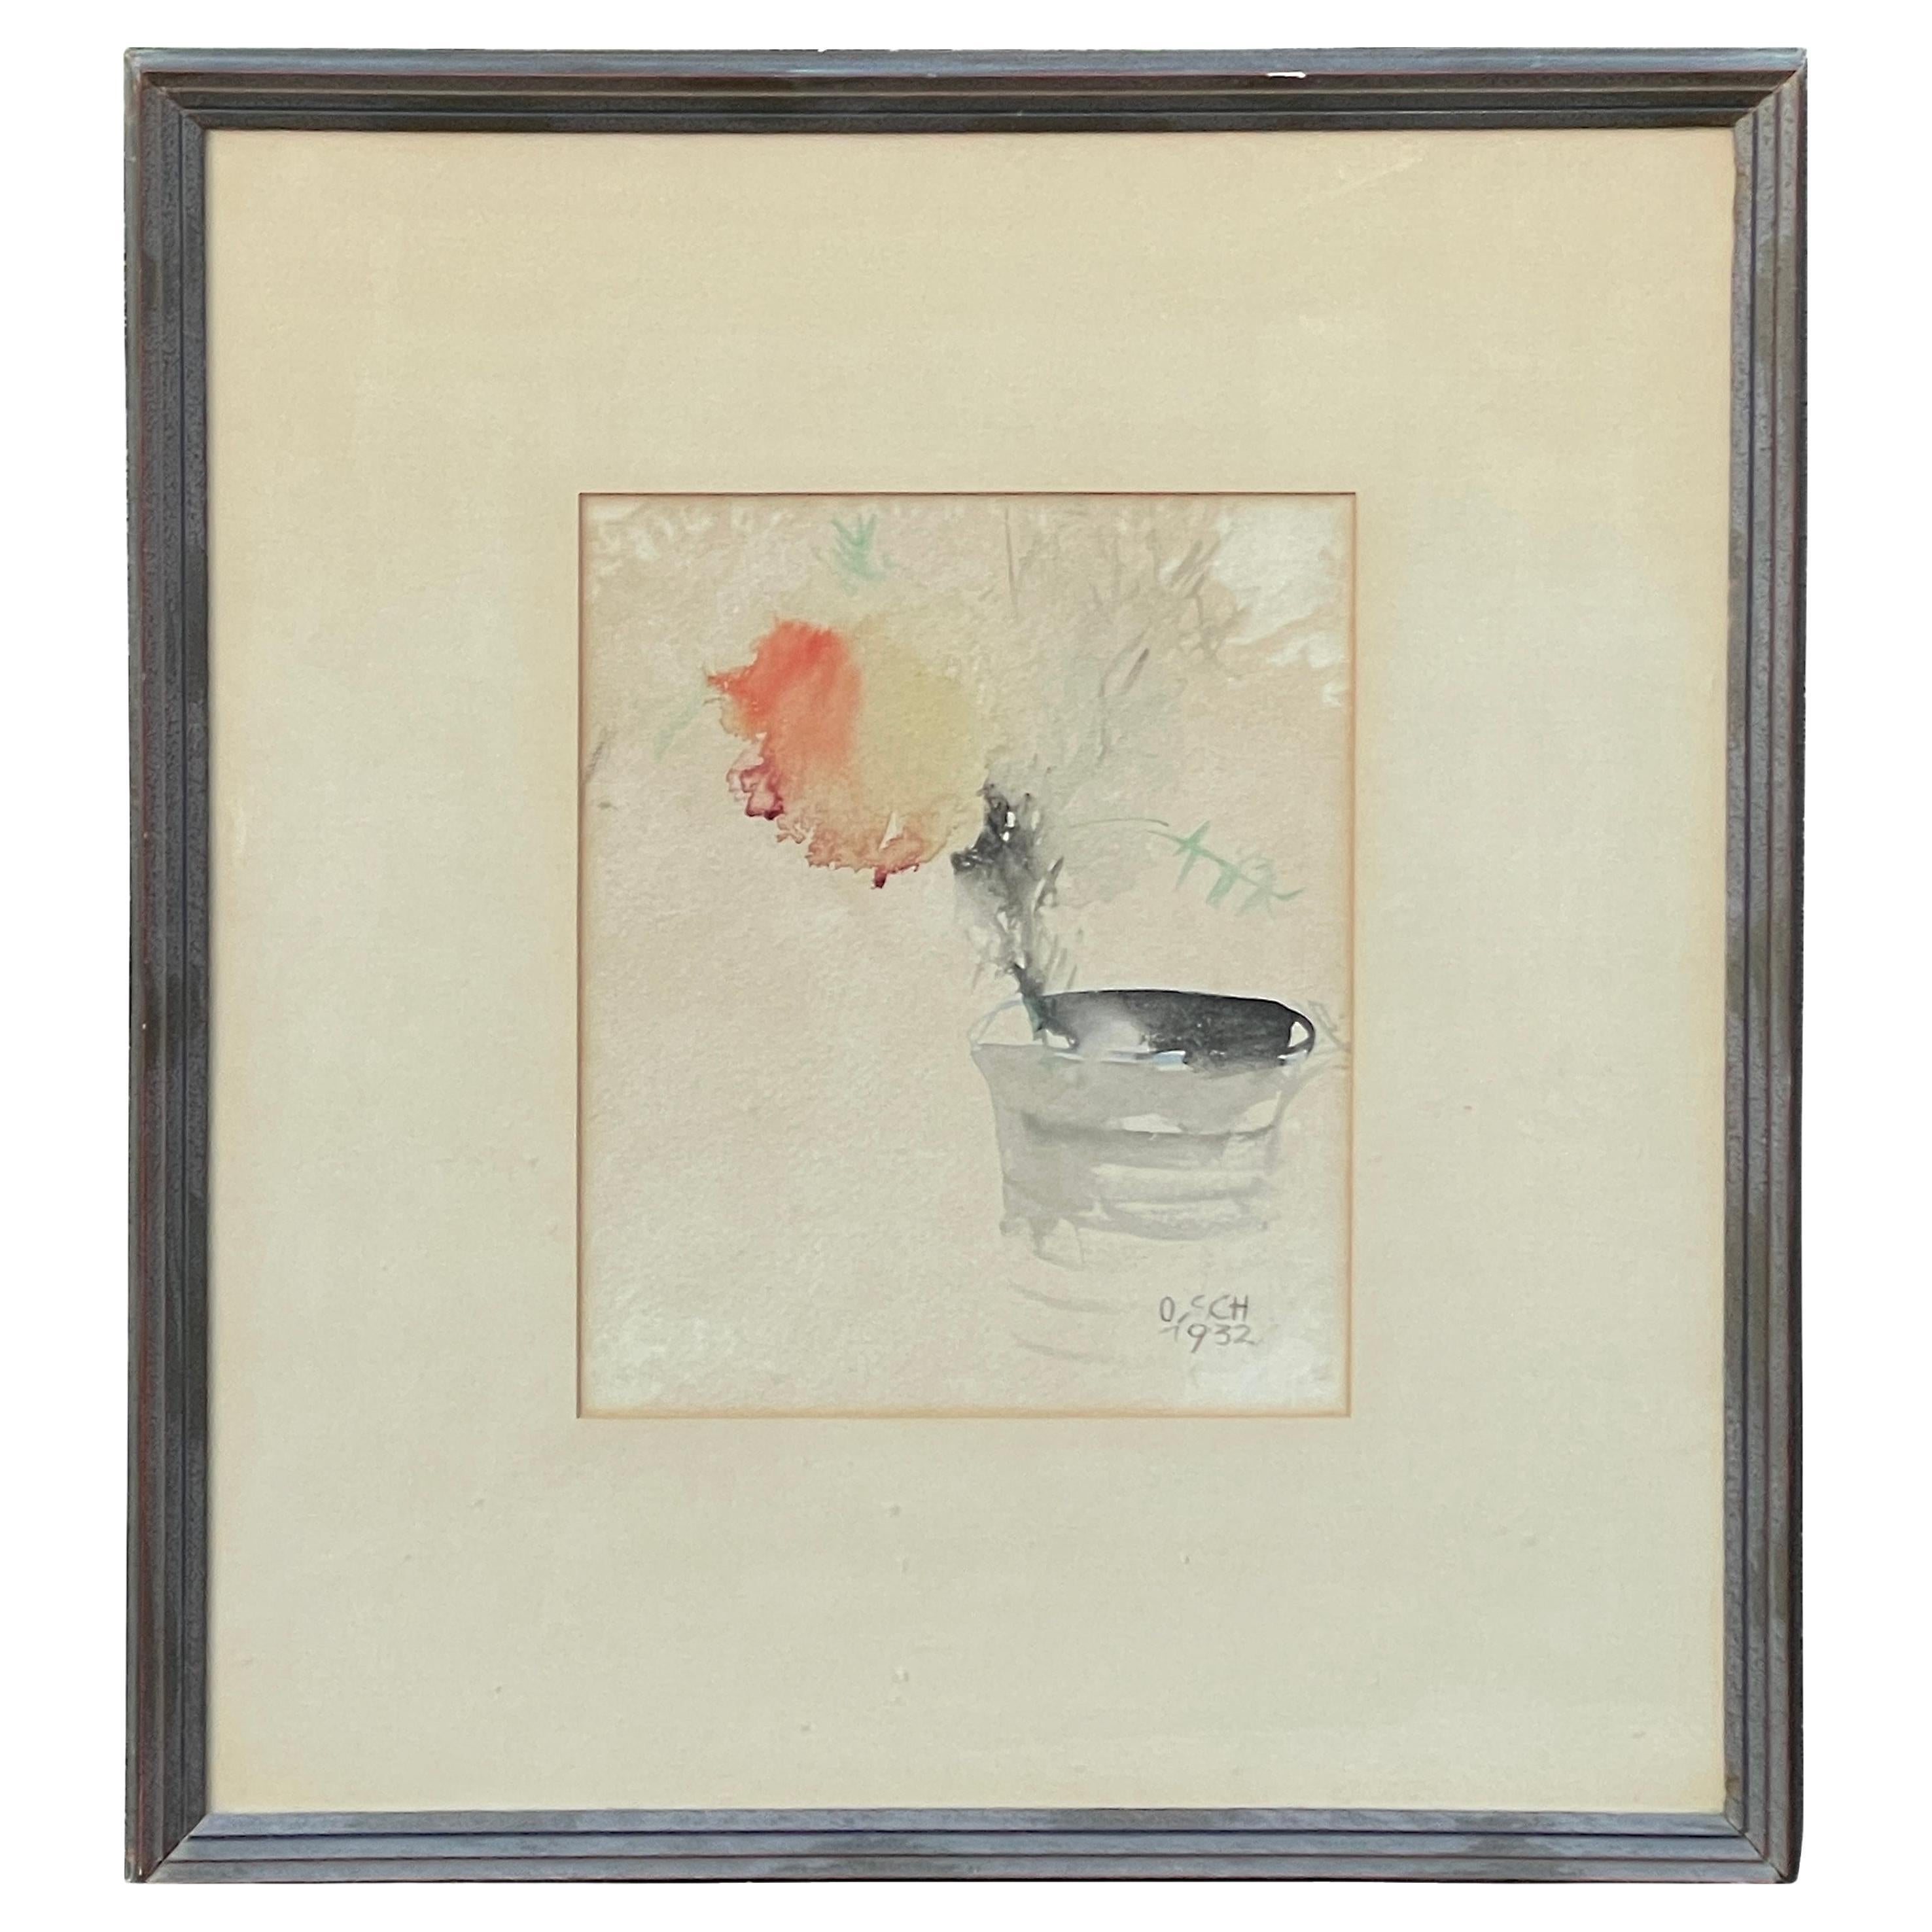 1932 Aquarelle abstraite contemporaine Nature morte fleurie Boîte de conserve Artiste inconnu